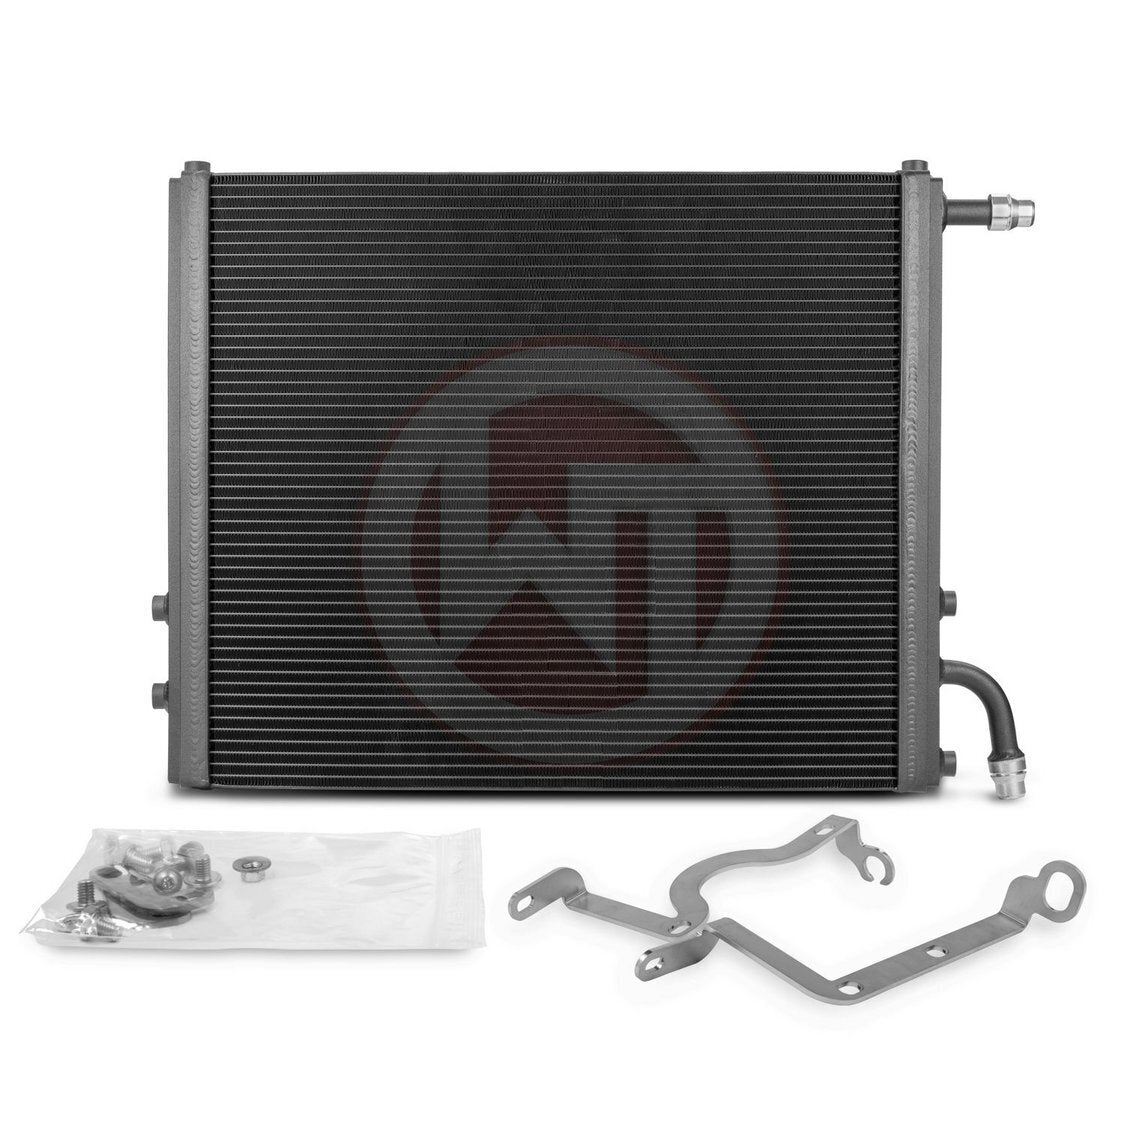 WAGNER TUNING - Wasserkühler Kit BMW / Toyota B48 / B58 Motor